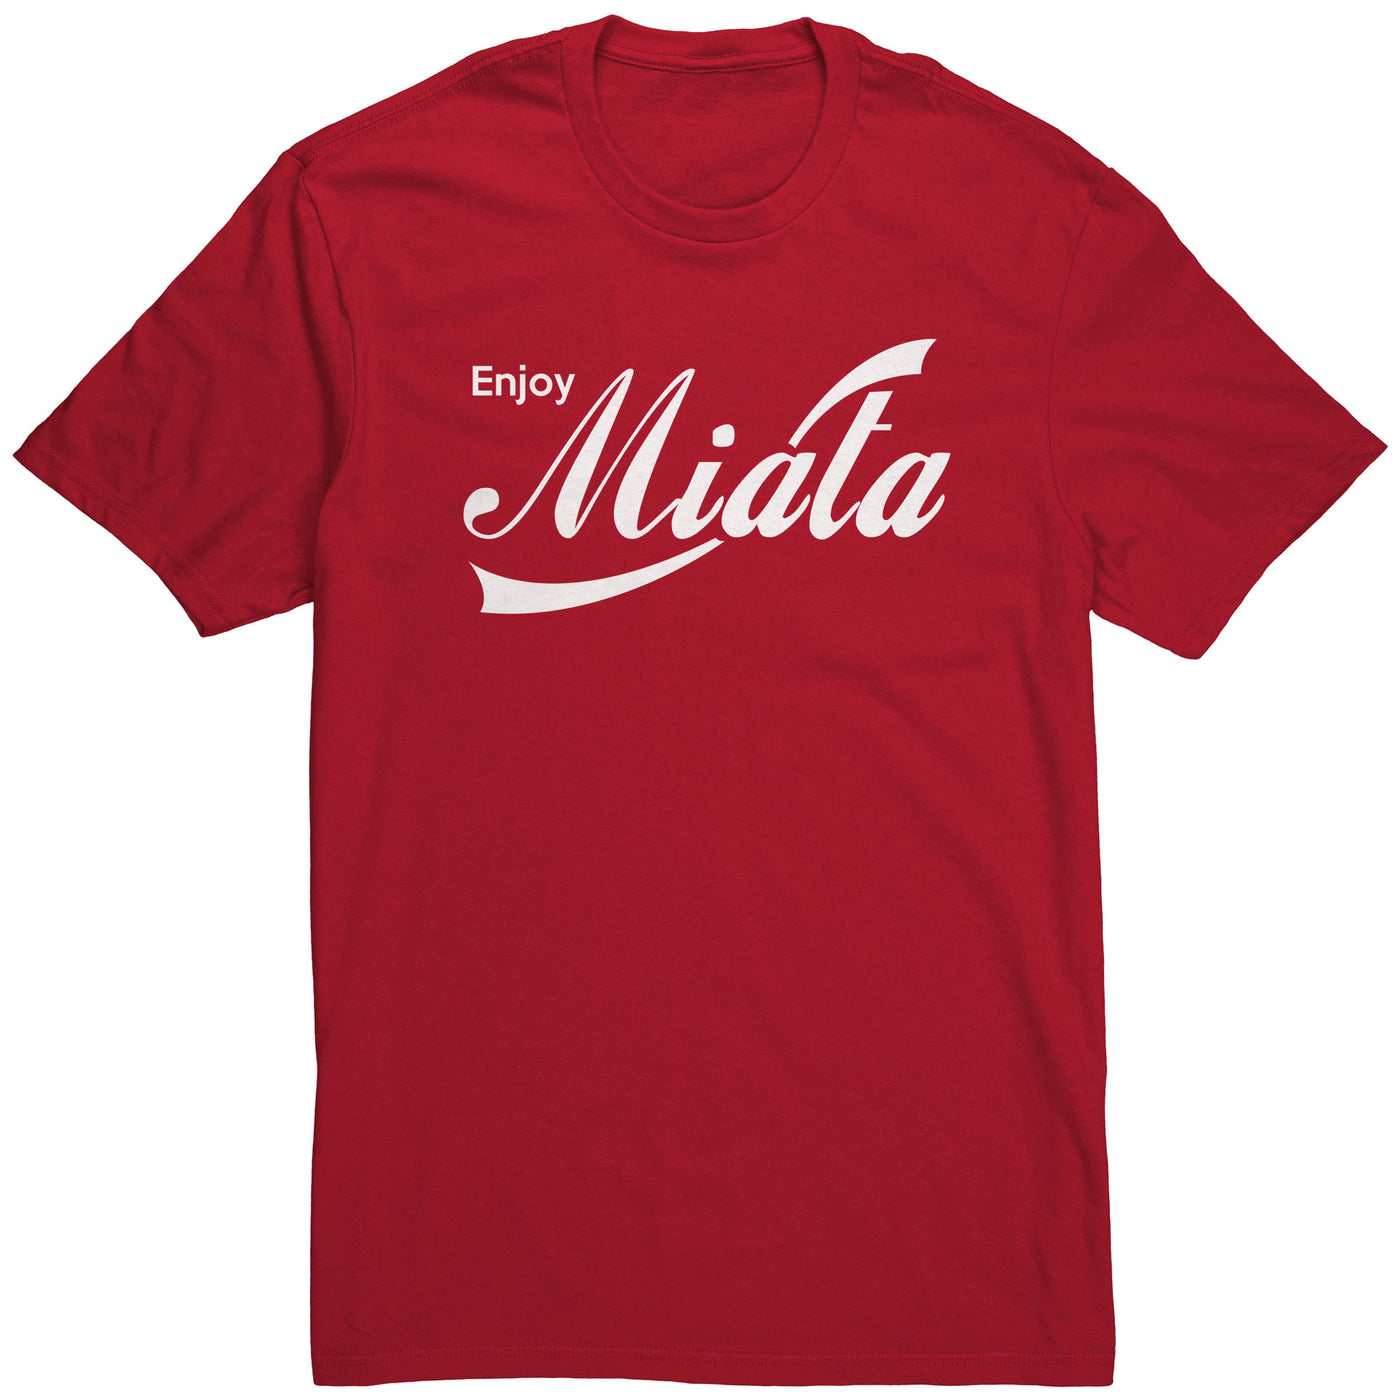 enjoy-miata-shirt-red